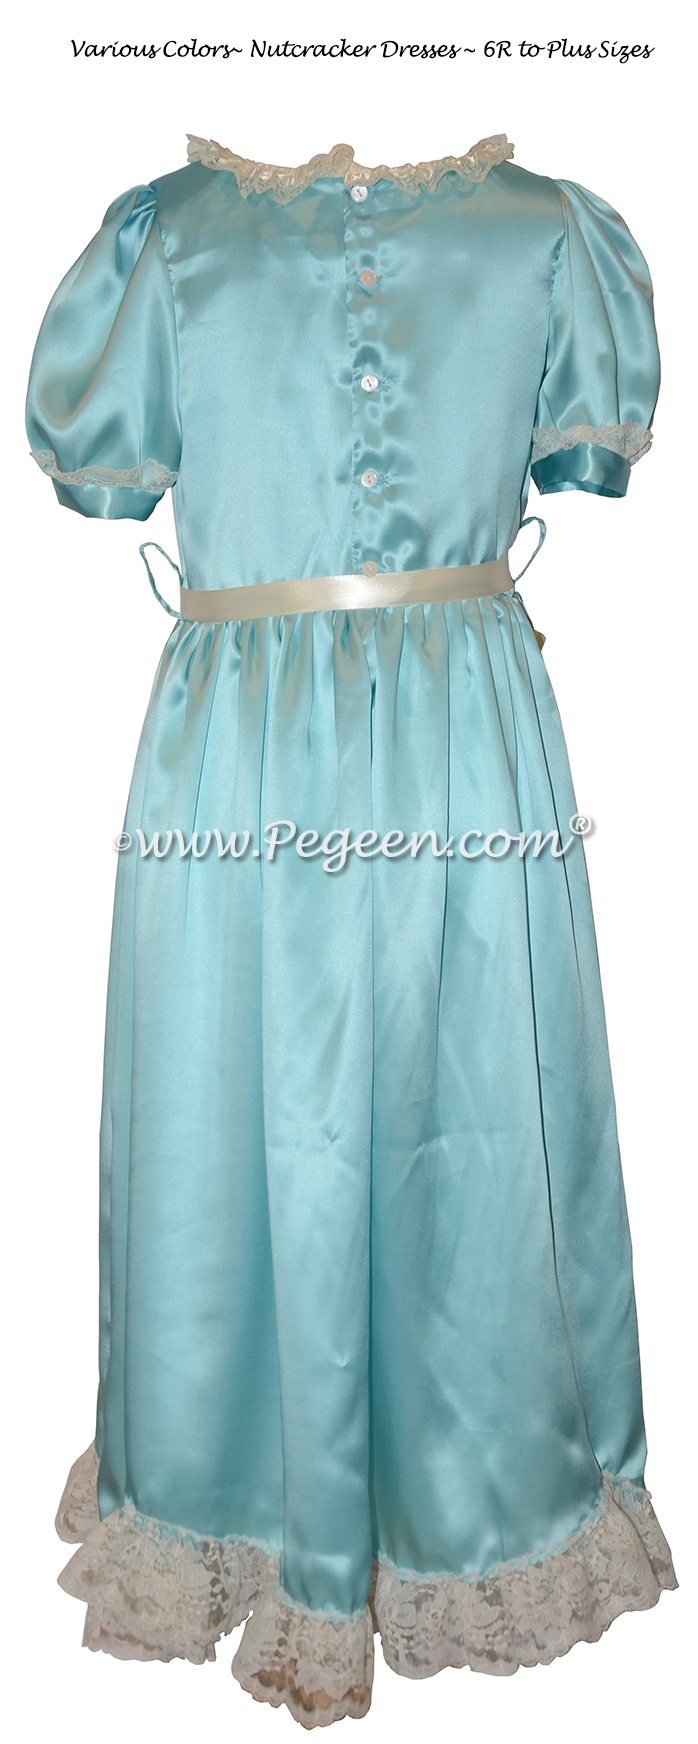 Clara Nutcracker Nightgown Dress in Turquoise Charmeuse Silk